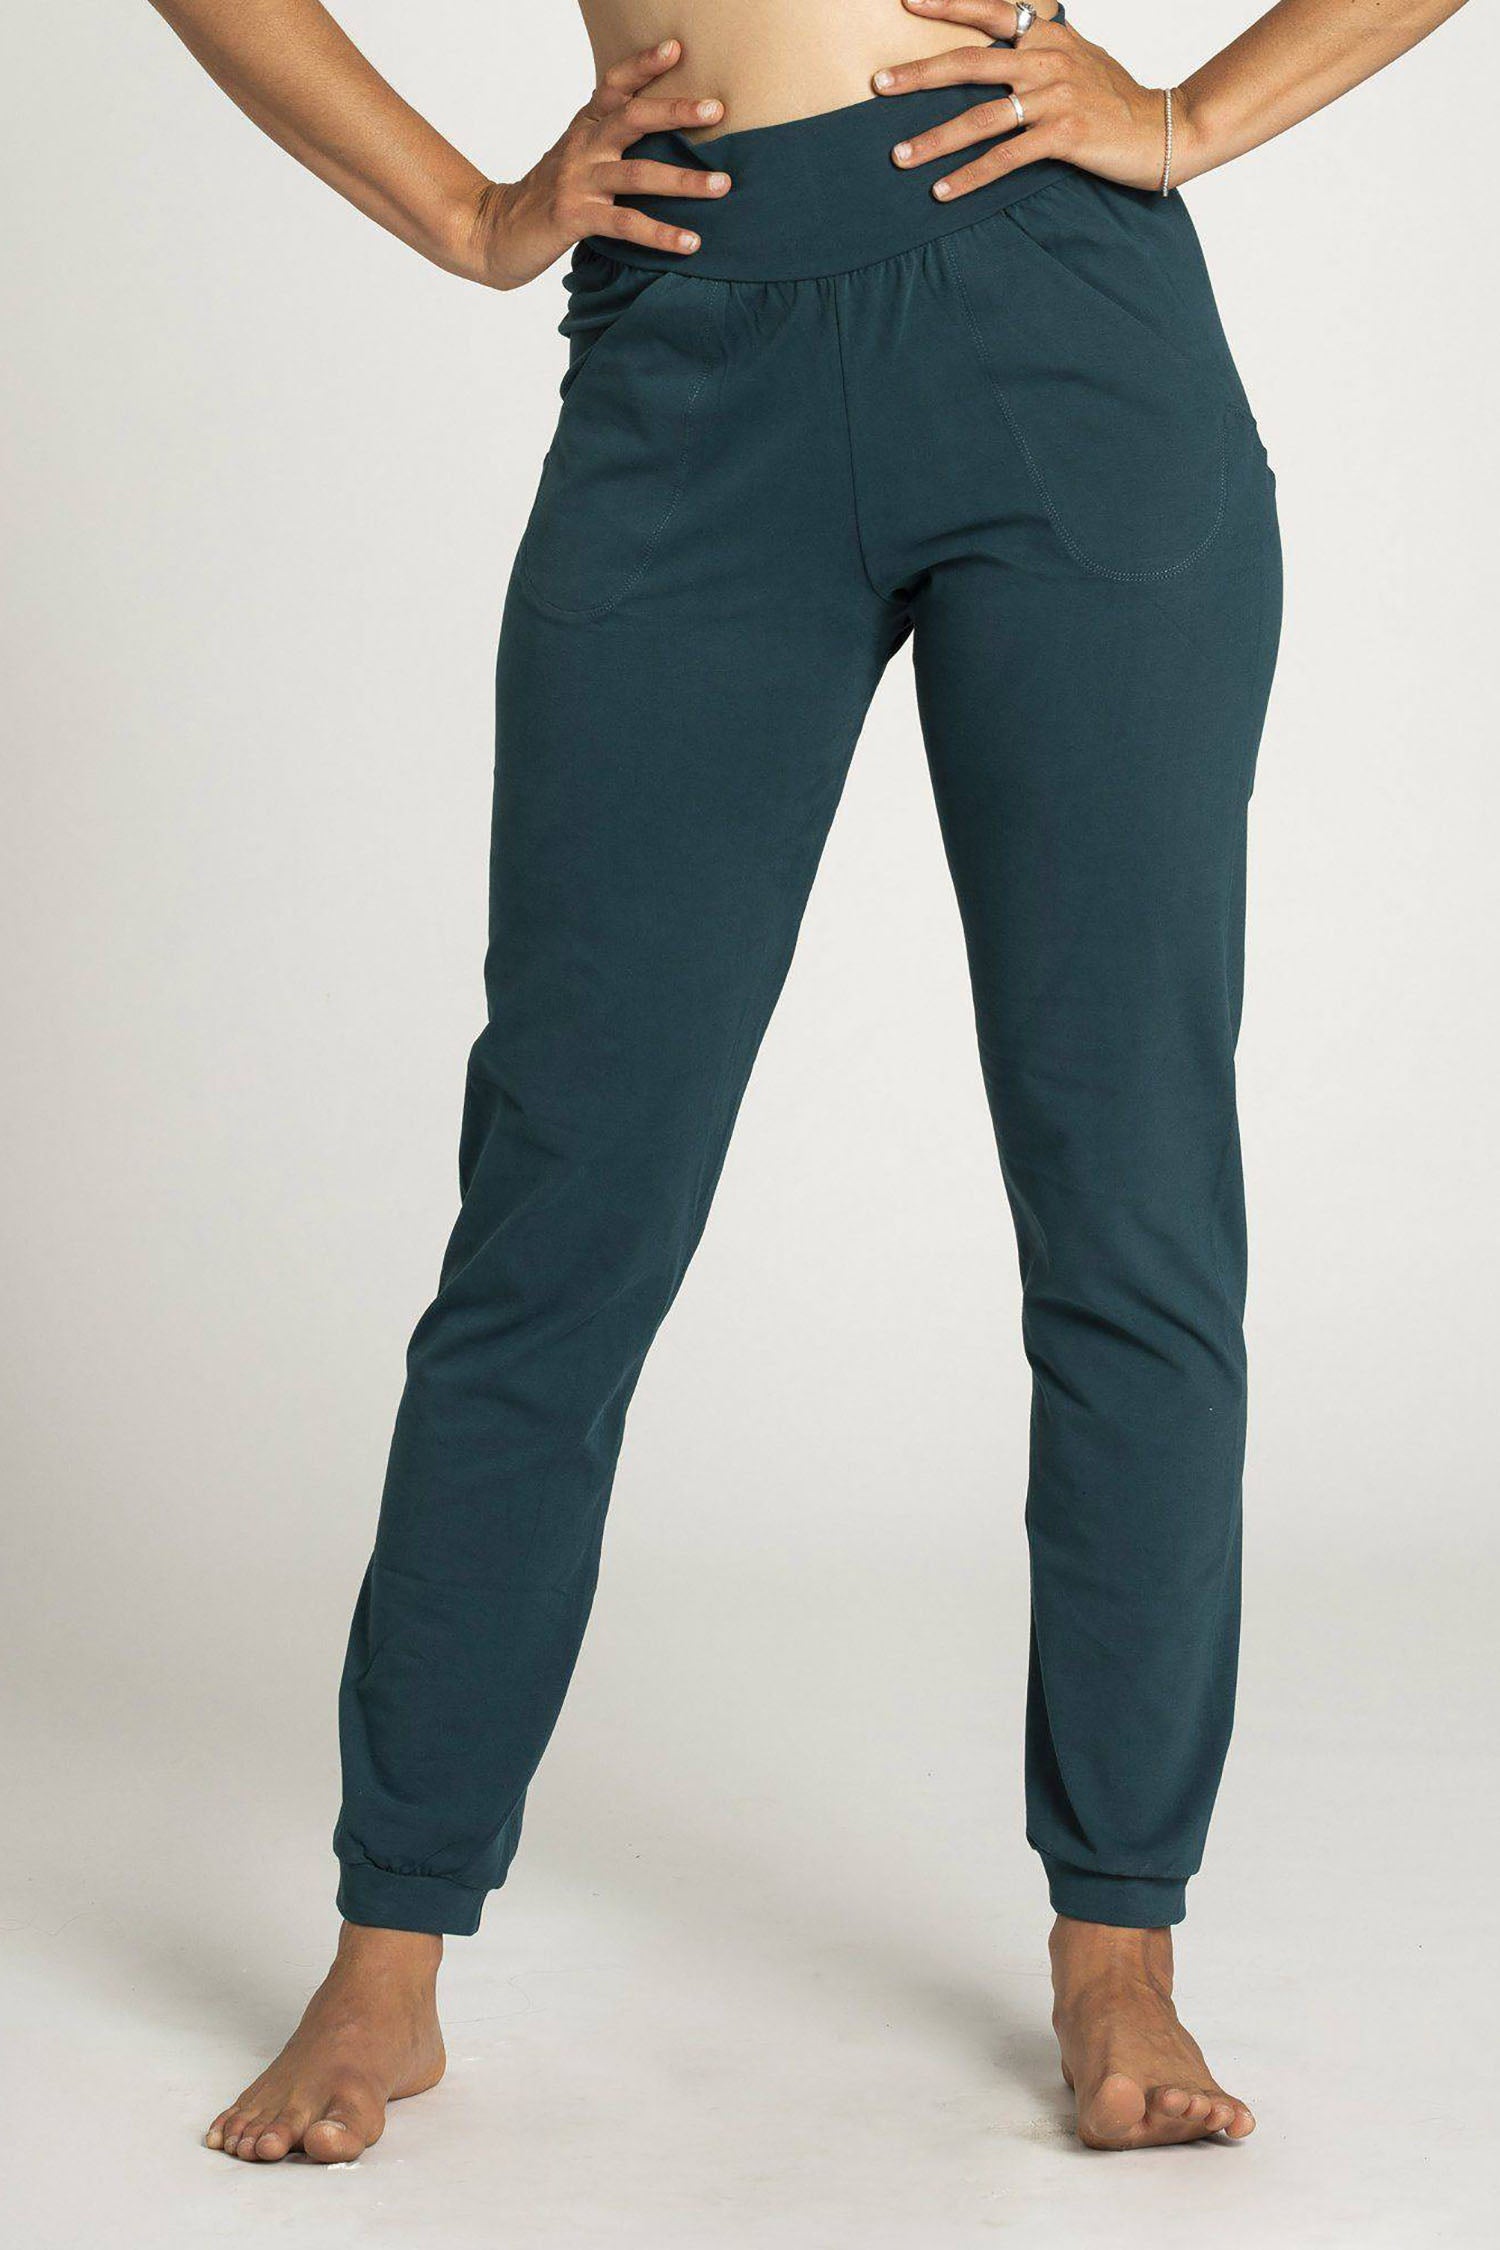 Daeful Bottoms Drawstring Capri Yoga Pants Low Waist Capris Pant Women  Lounge Leisure Elastic Waisted Trousers Green XL